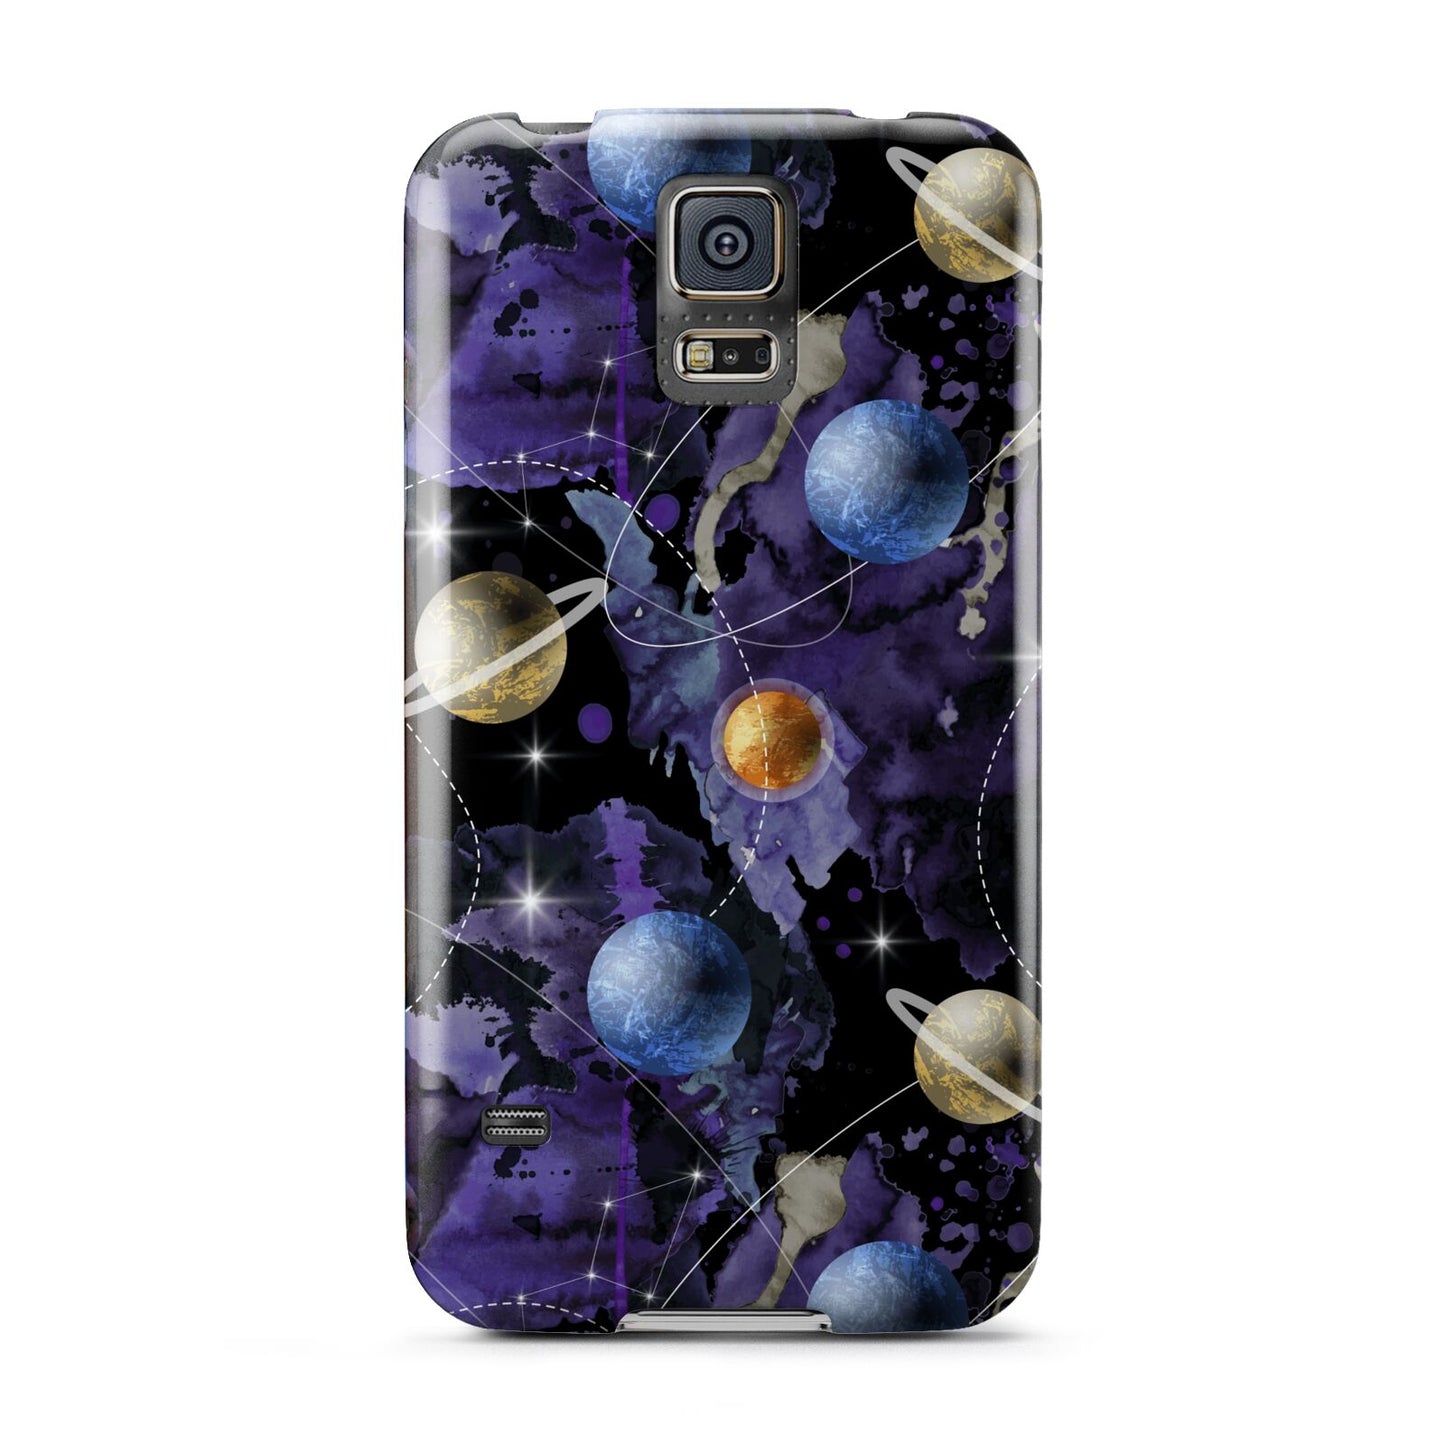 Planet Samsung Galaxy S5 Case